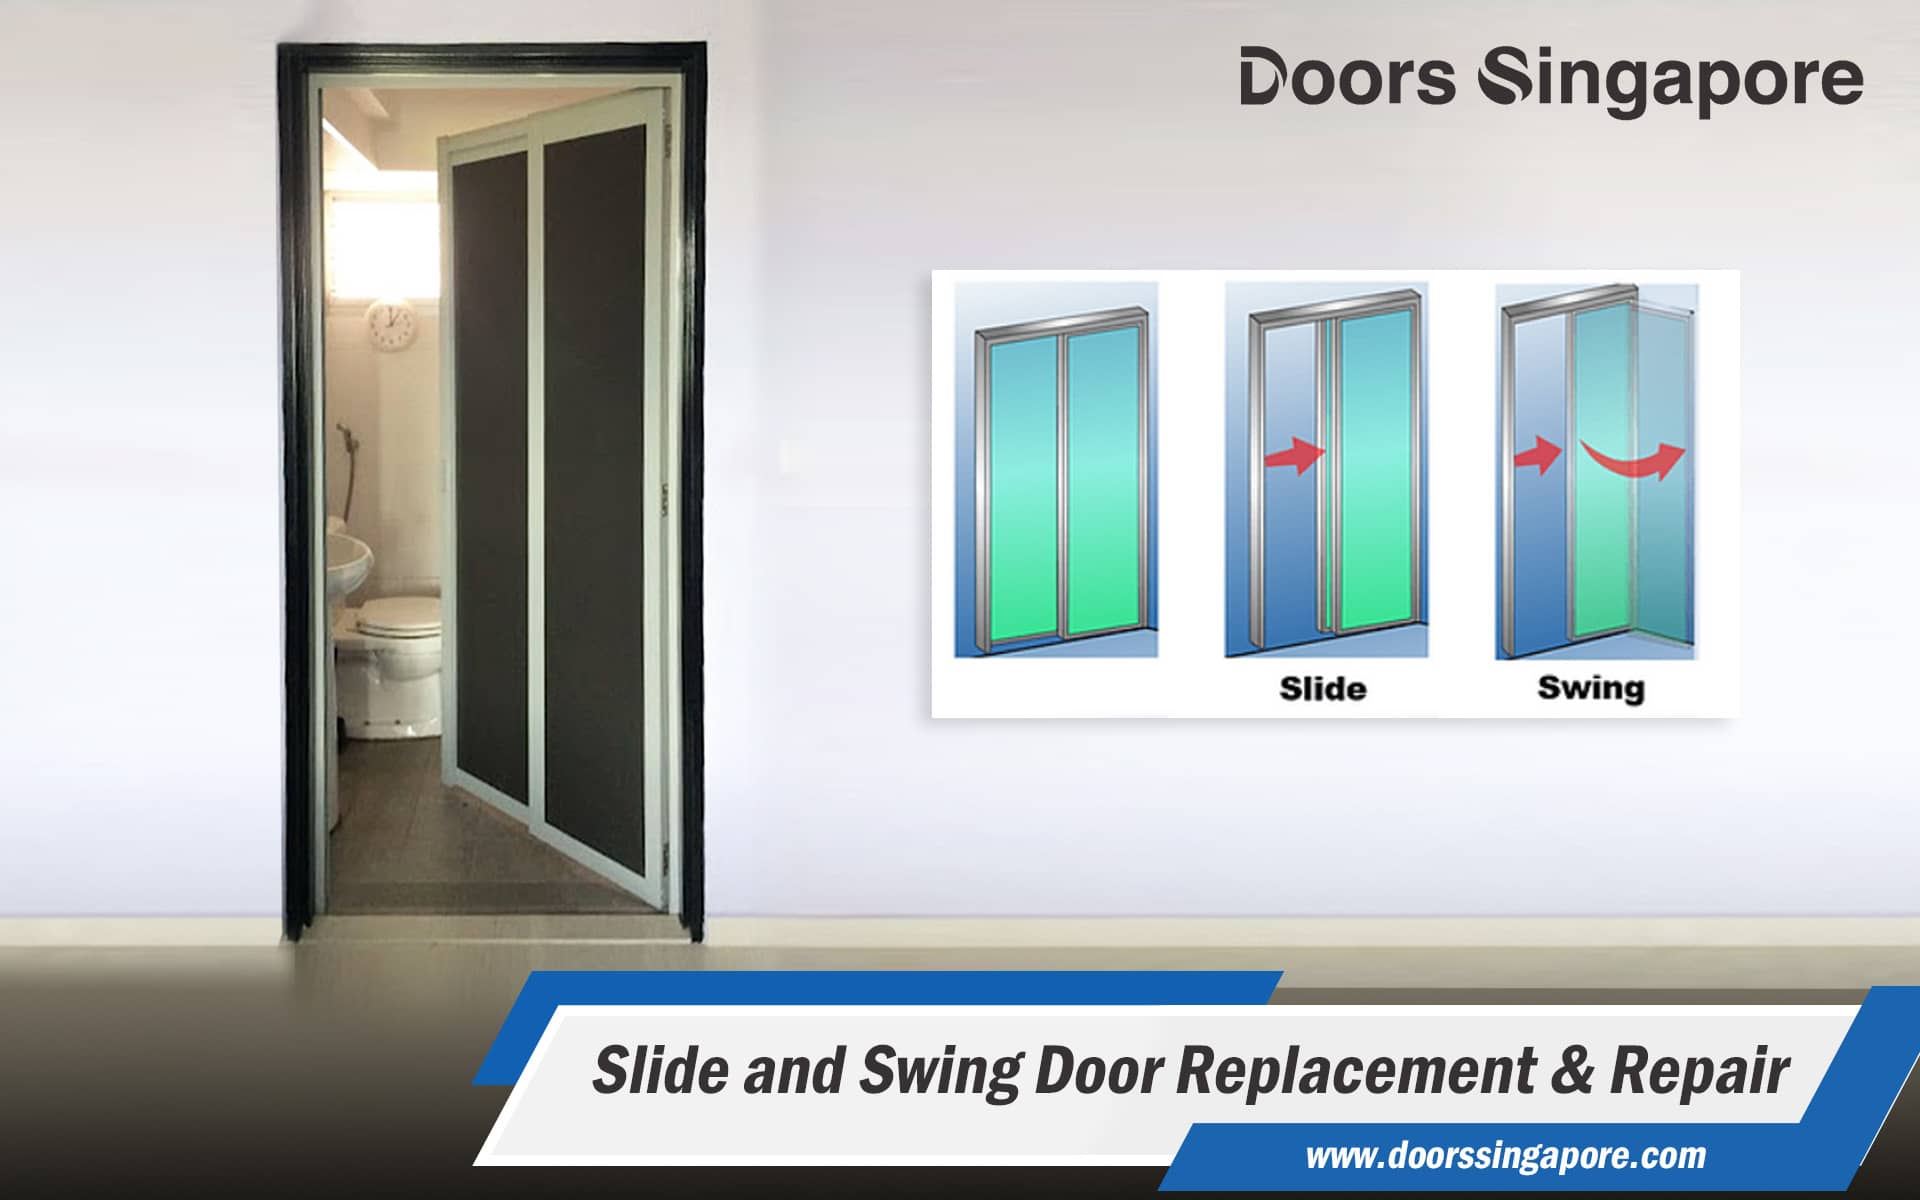 Slide and Swing Door Replacement & Repair